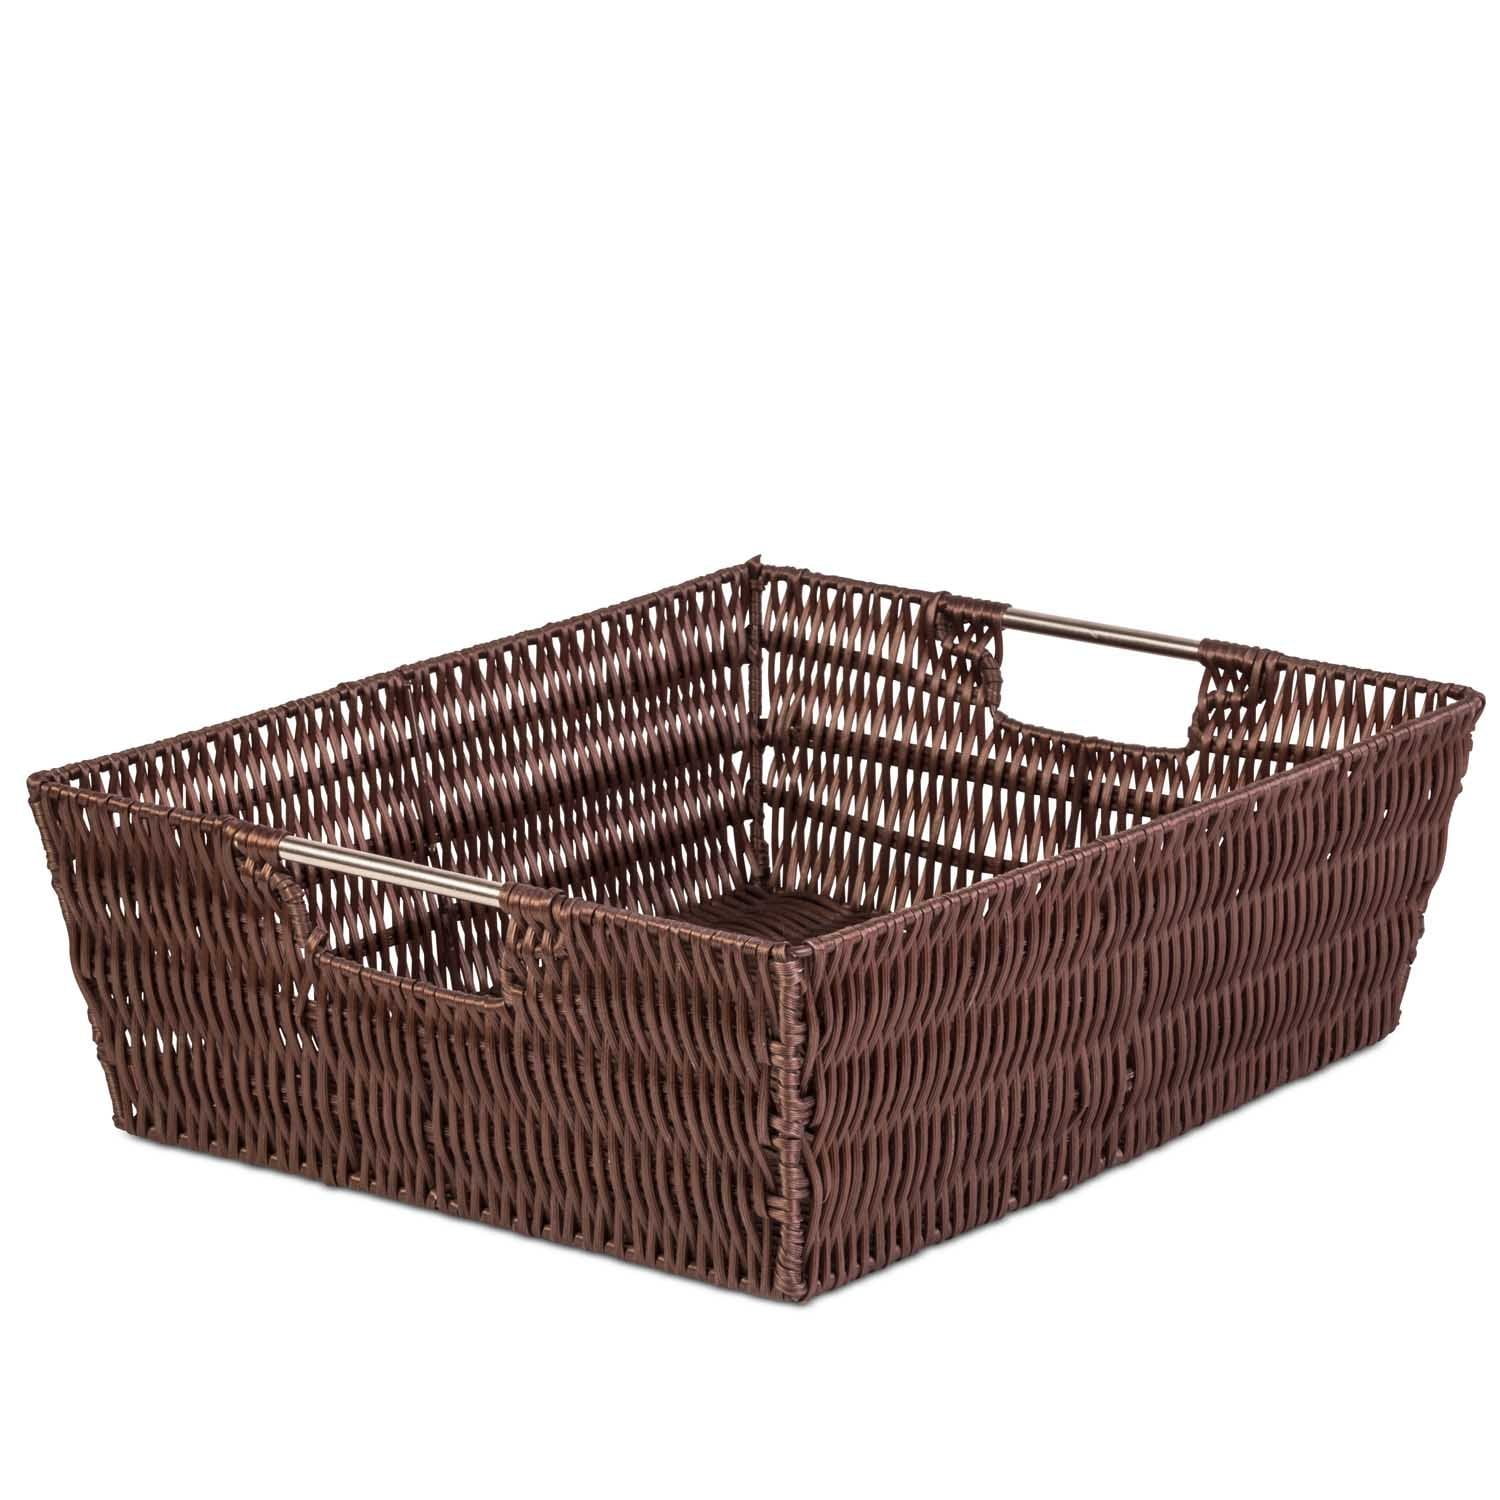 flat storage baskets